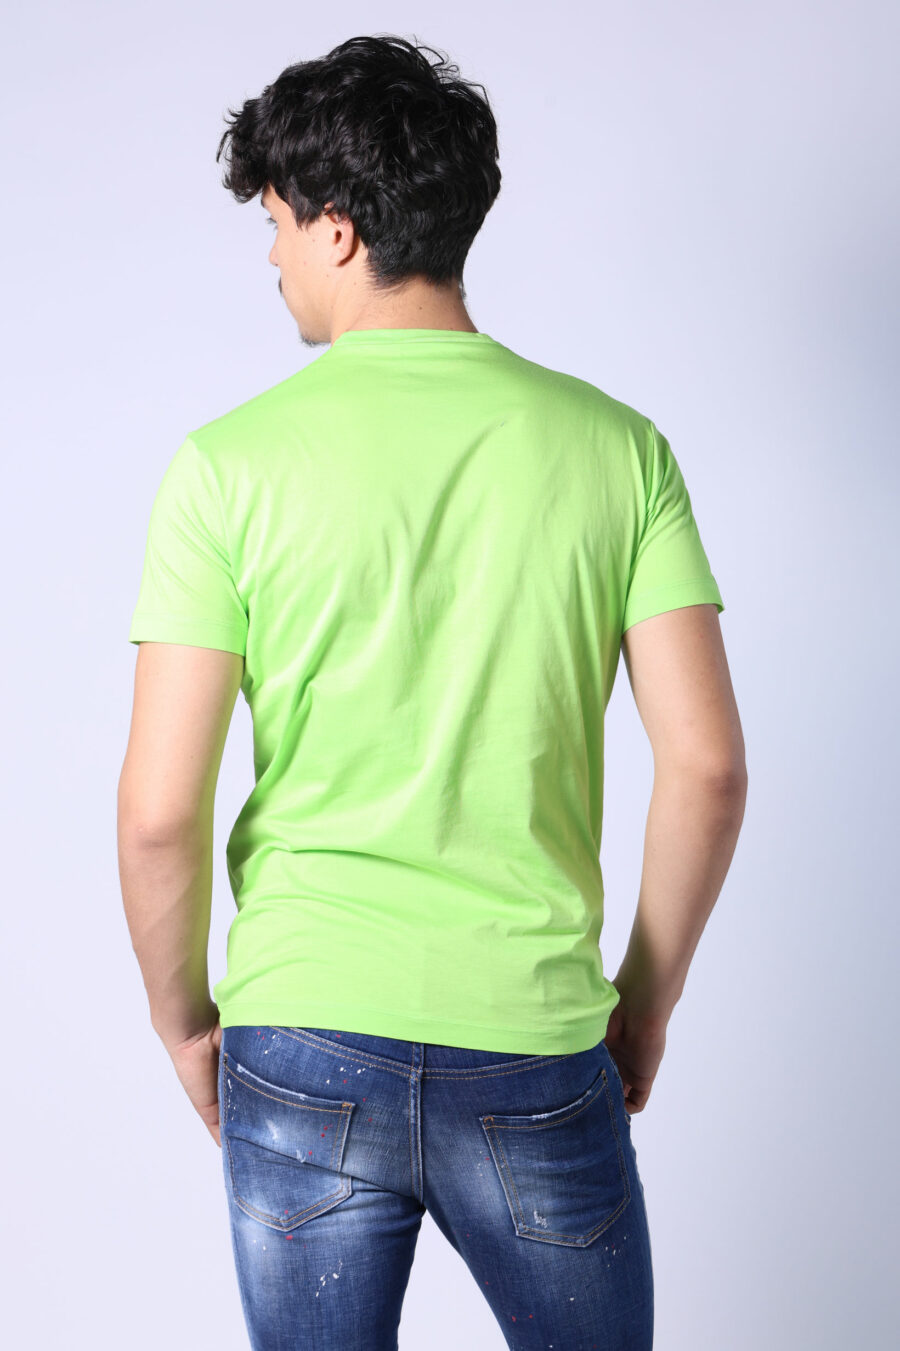 Lime green t-shirt with black "icon" maxilogo - Untitled Catalog 05397